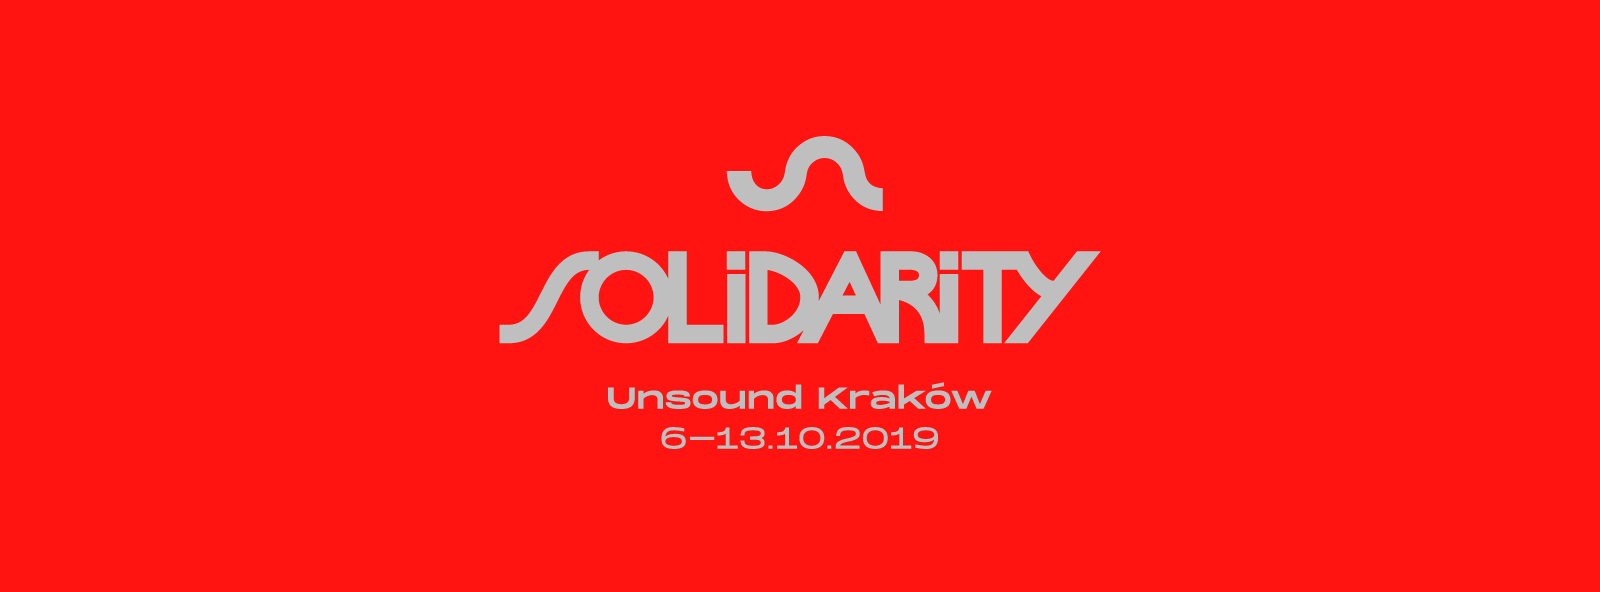 soildarity - unsound kraków logo